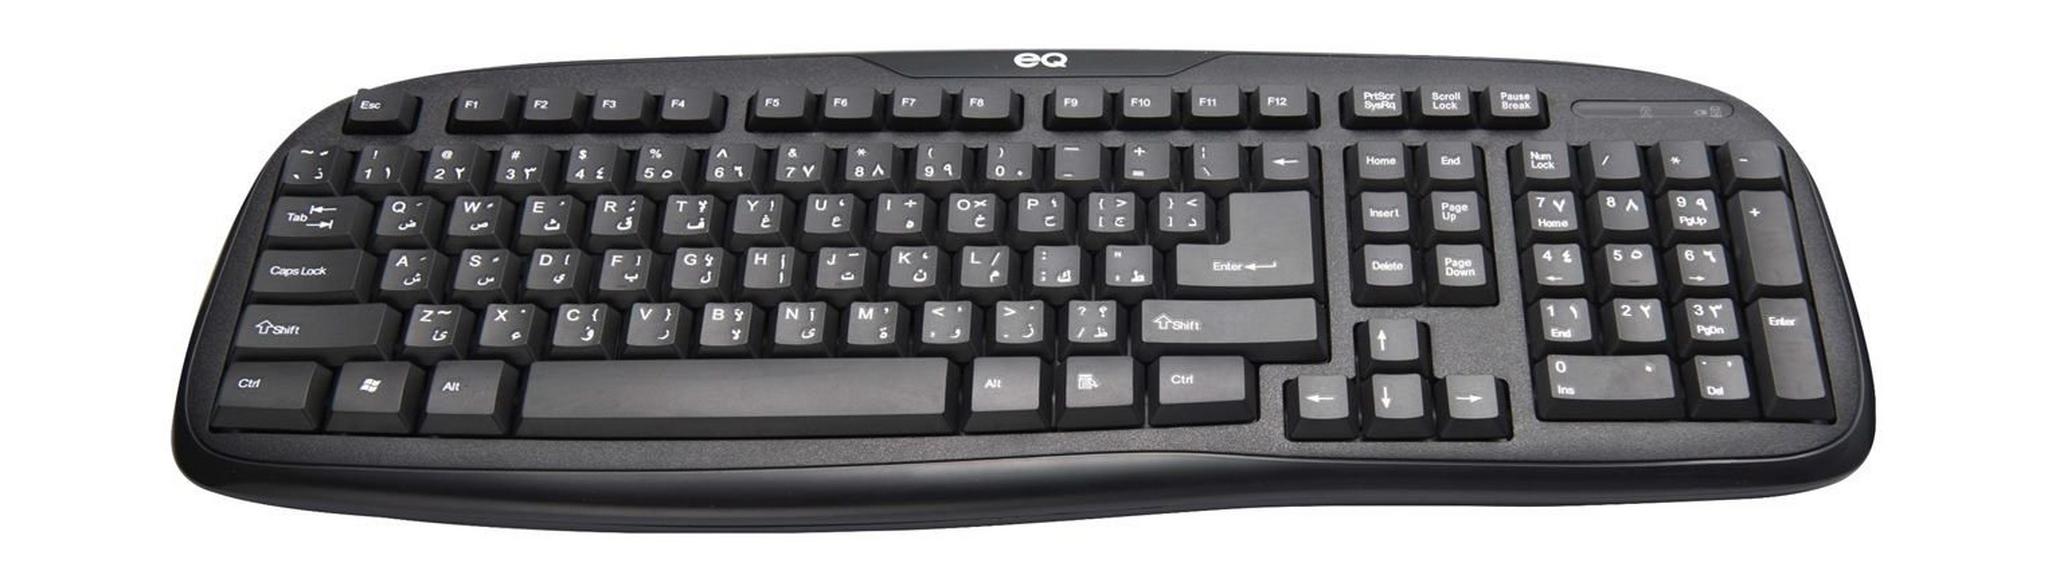 EQ Wirelss Mouse & Keyboard Combo